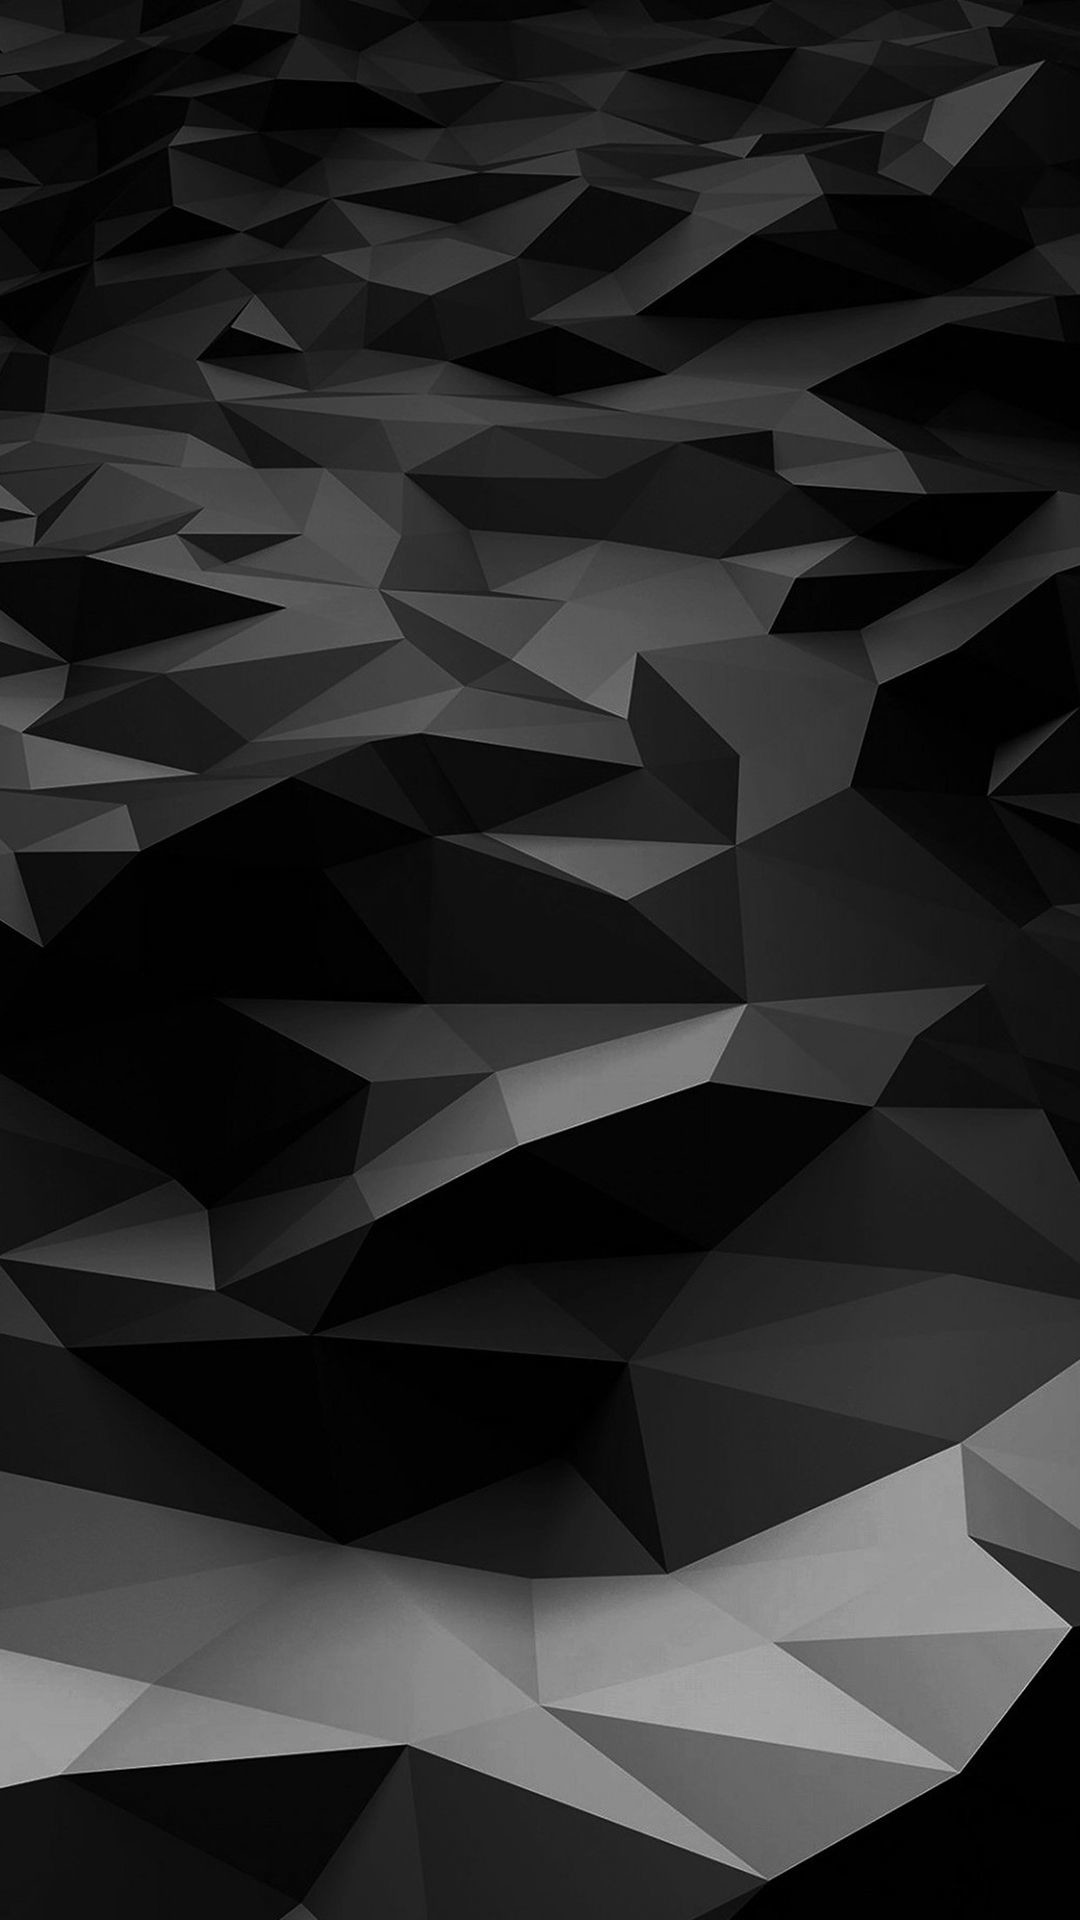 1080x1920 low poly art dark black pattern iphone 6 wallpapers download